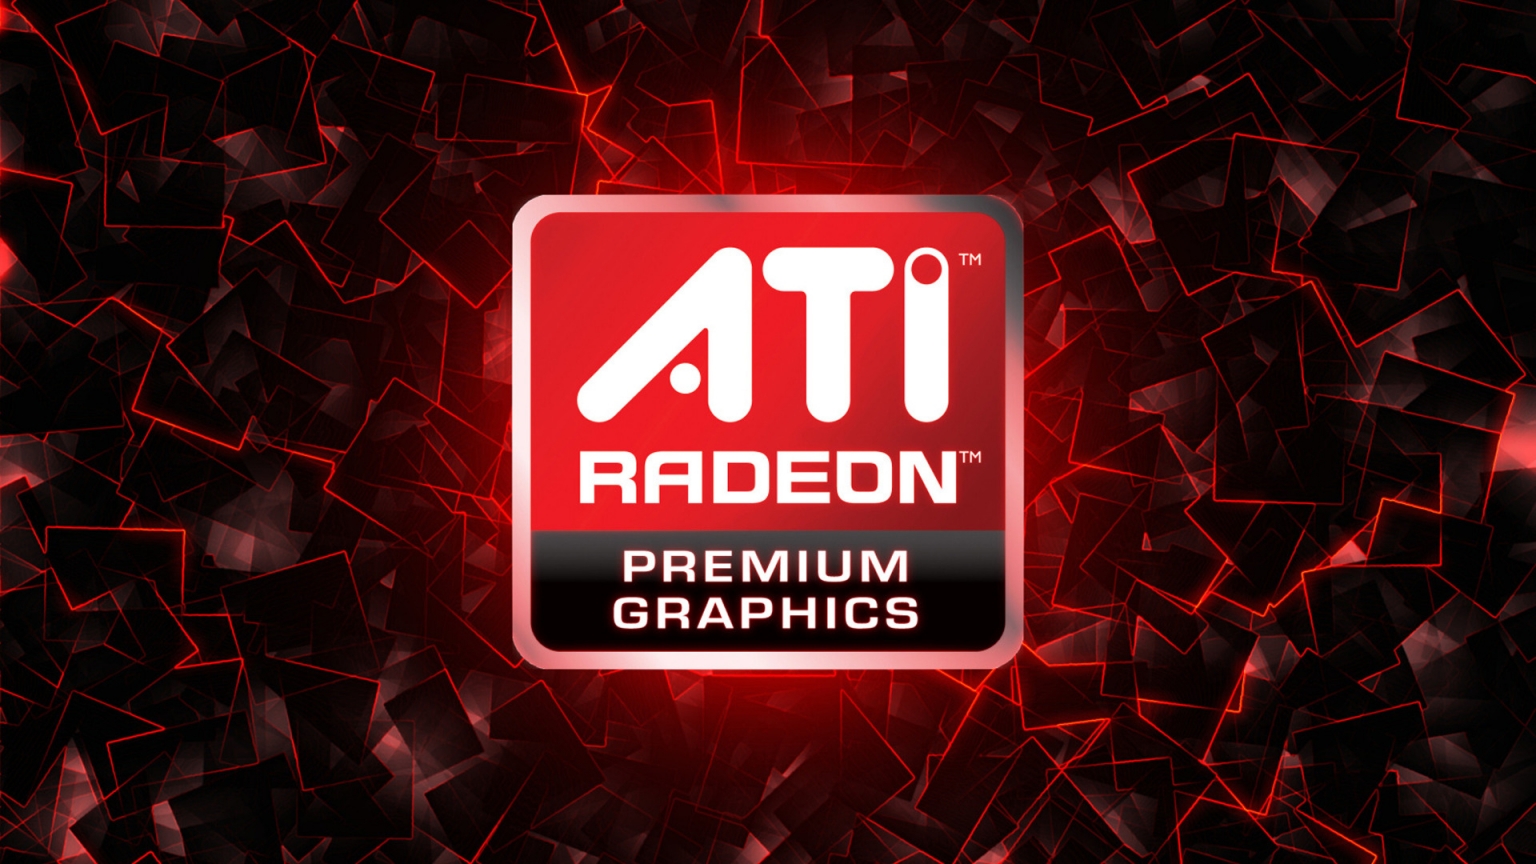 ATI Radeon Premium Graphics for 1536 x 864 HDTV resolution